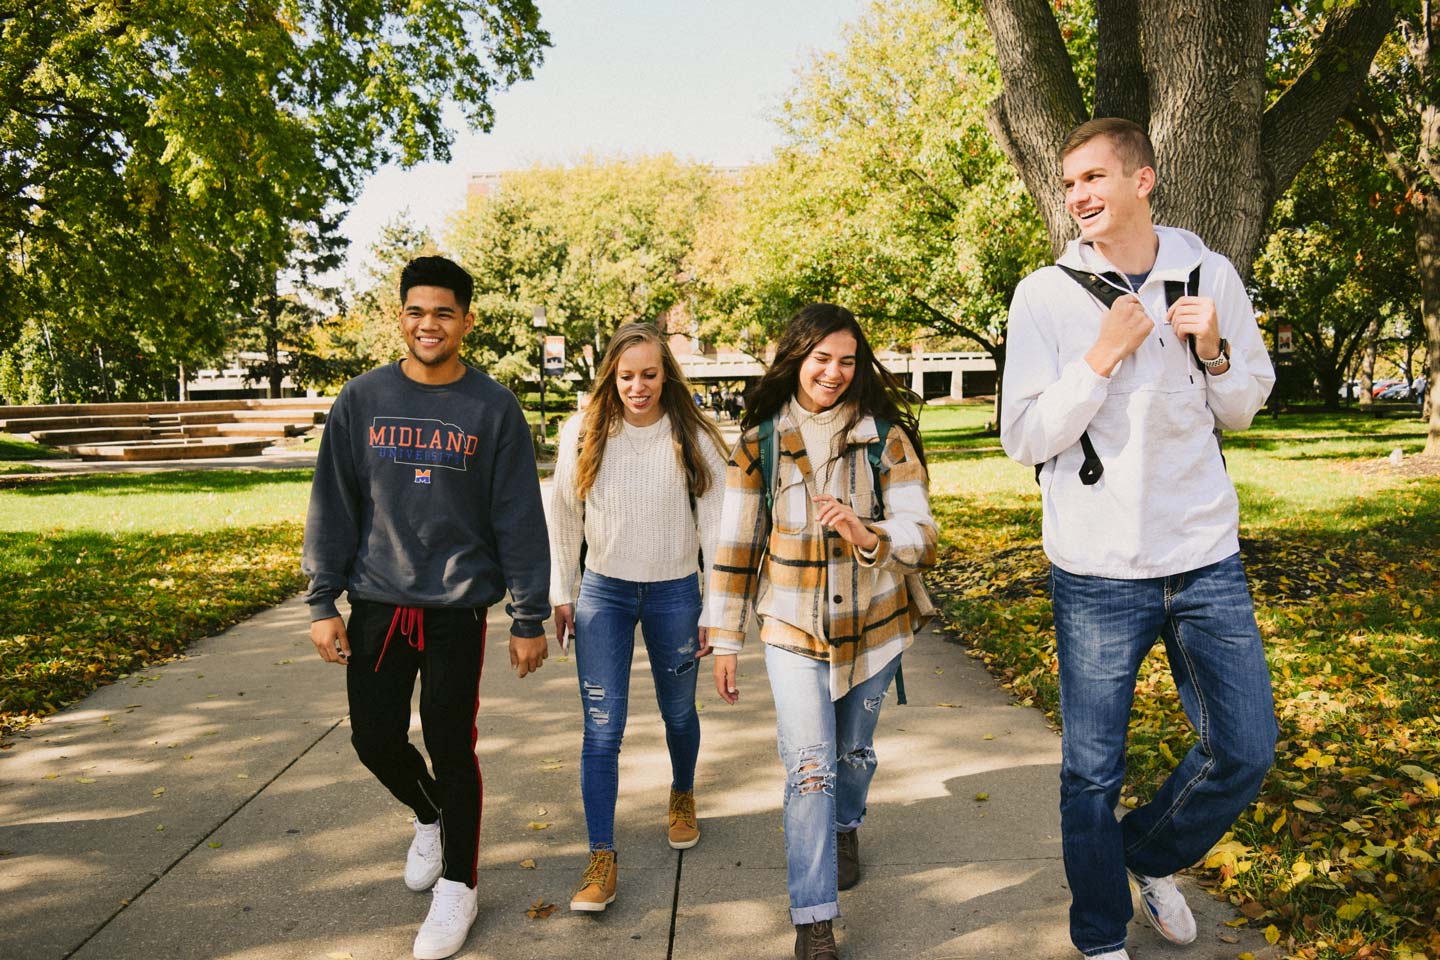 Midland University Students Outdoors on Campus